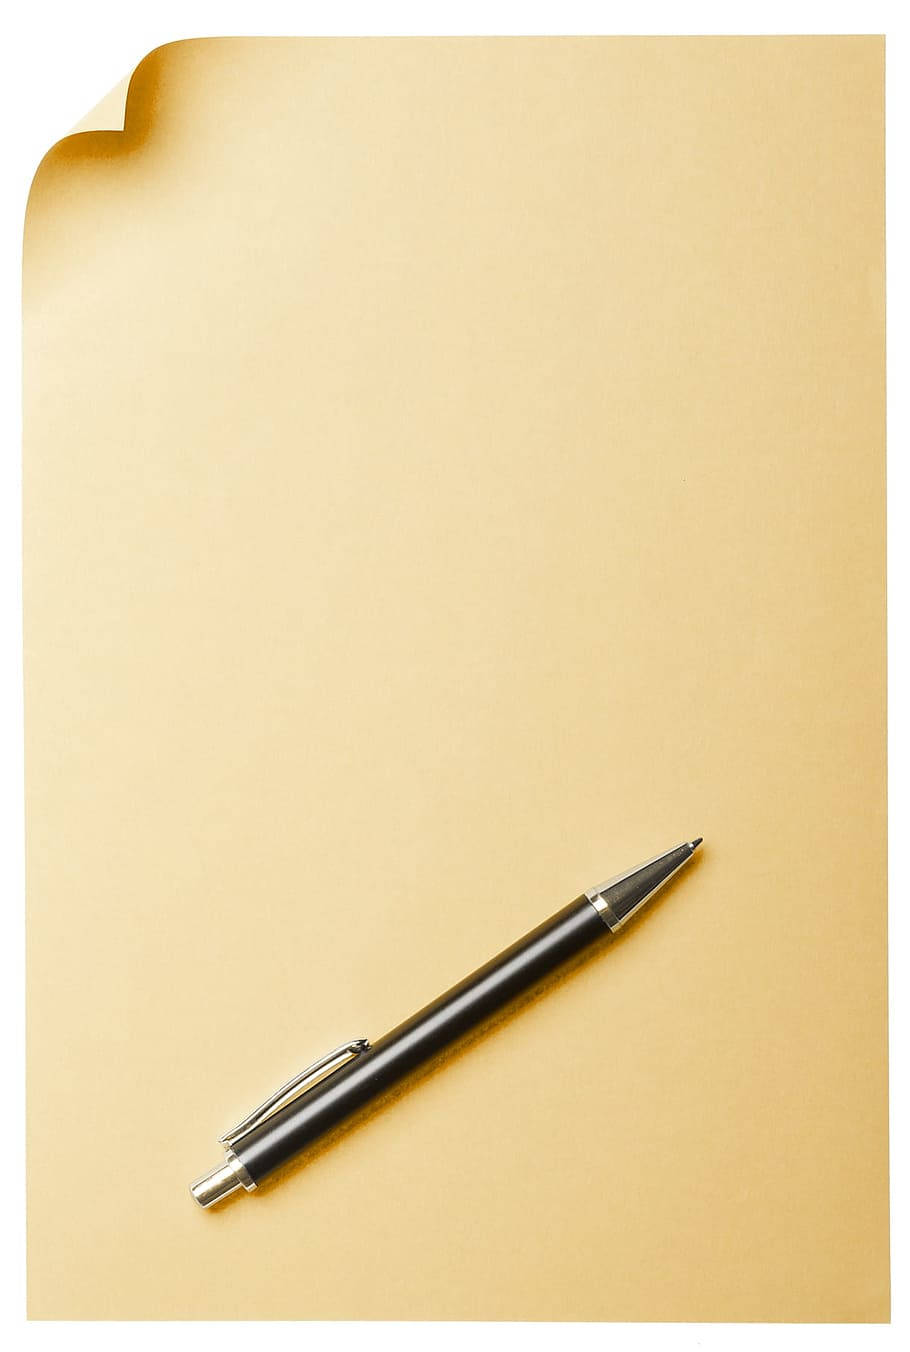 Blank Page Jute Paper Metal Pen Wallpaper